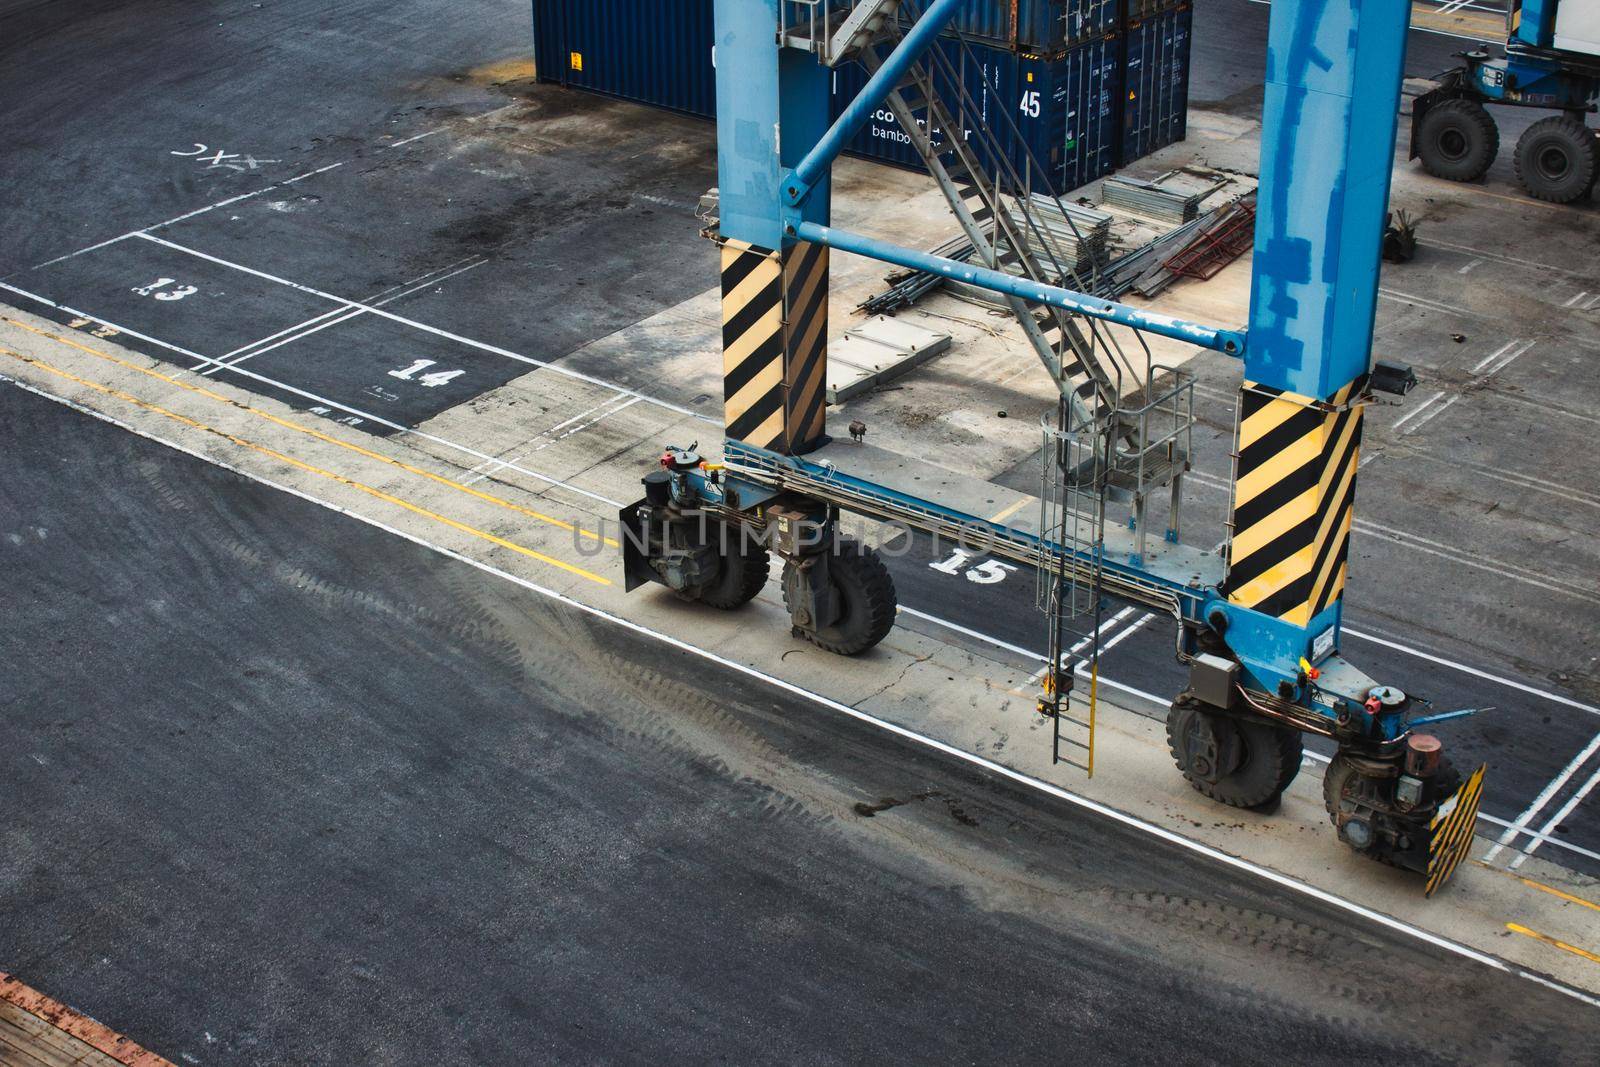 Mobile crane at a cargo bay commercial dock